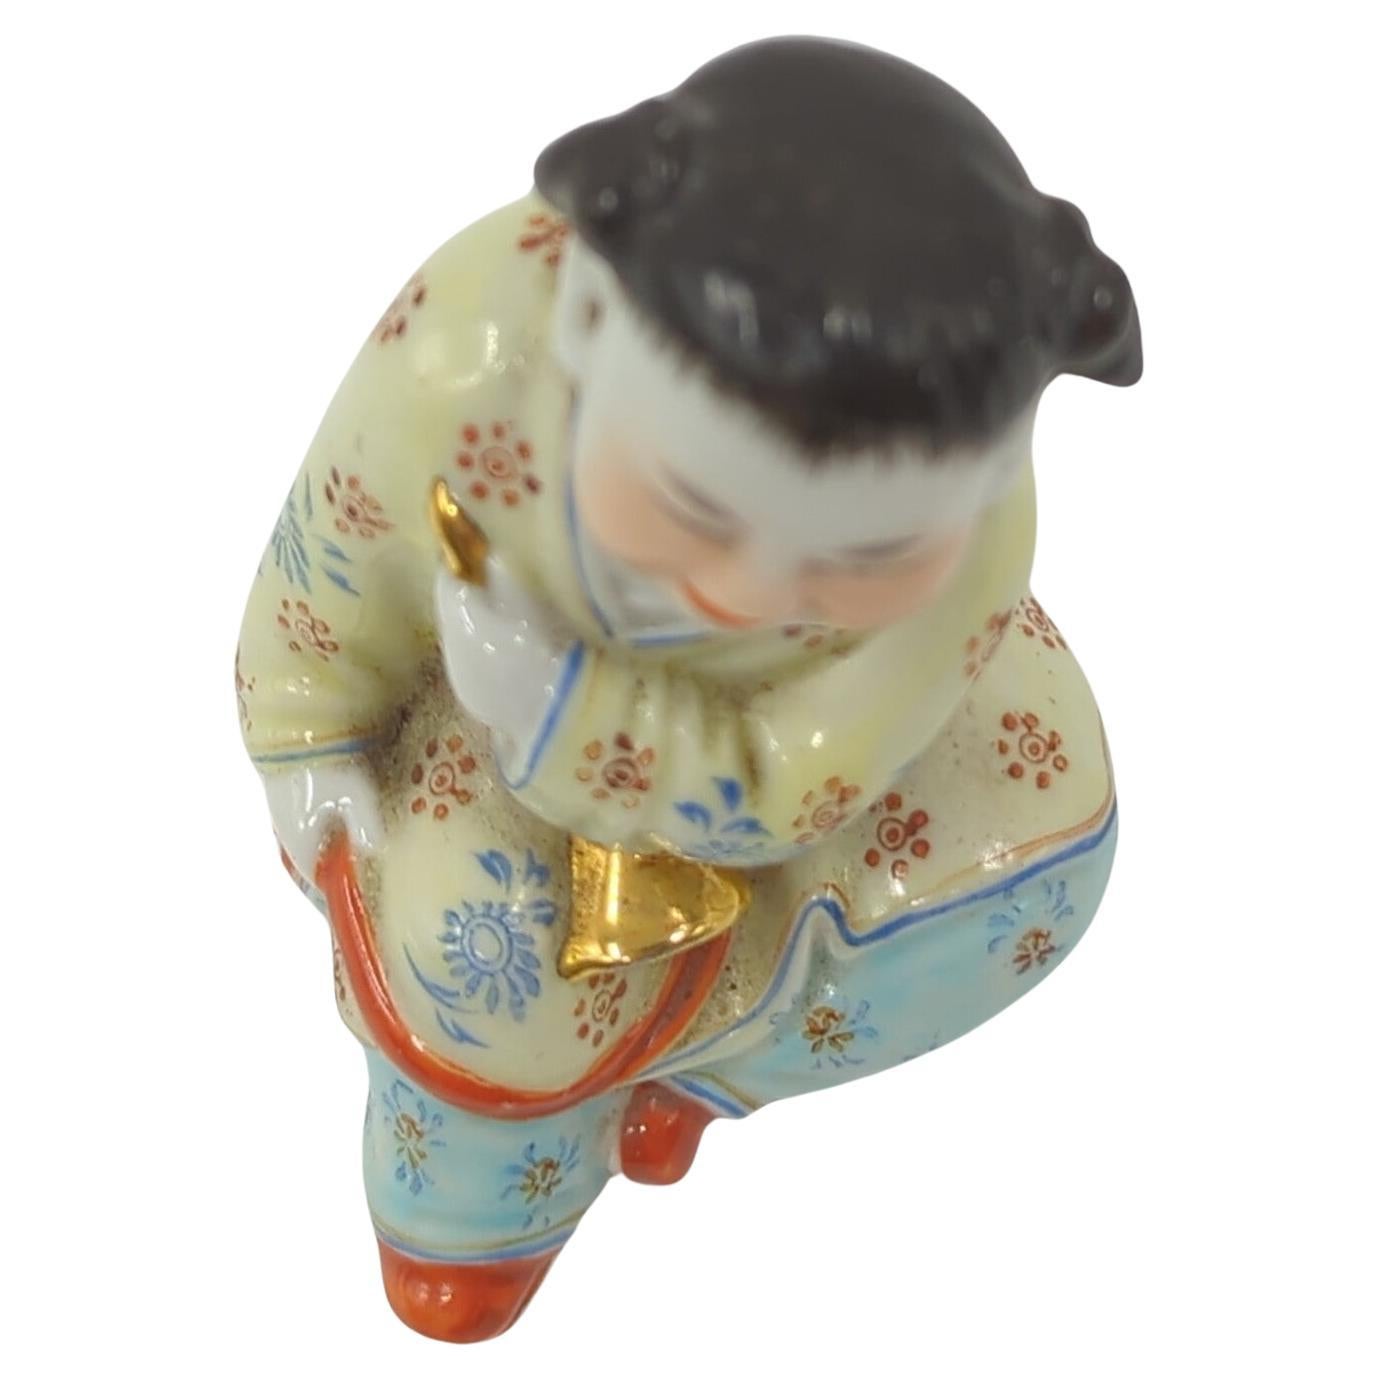 Vintage Chinese Fencai Porcelain Figure Playful Sitting Child/Boy c.1926 ROC For Sale 1